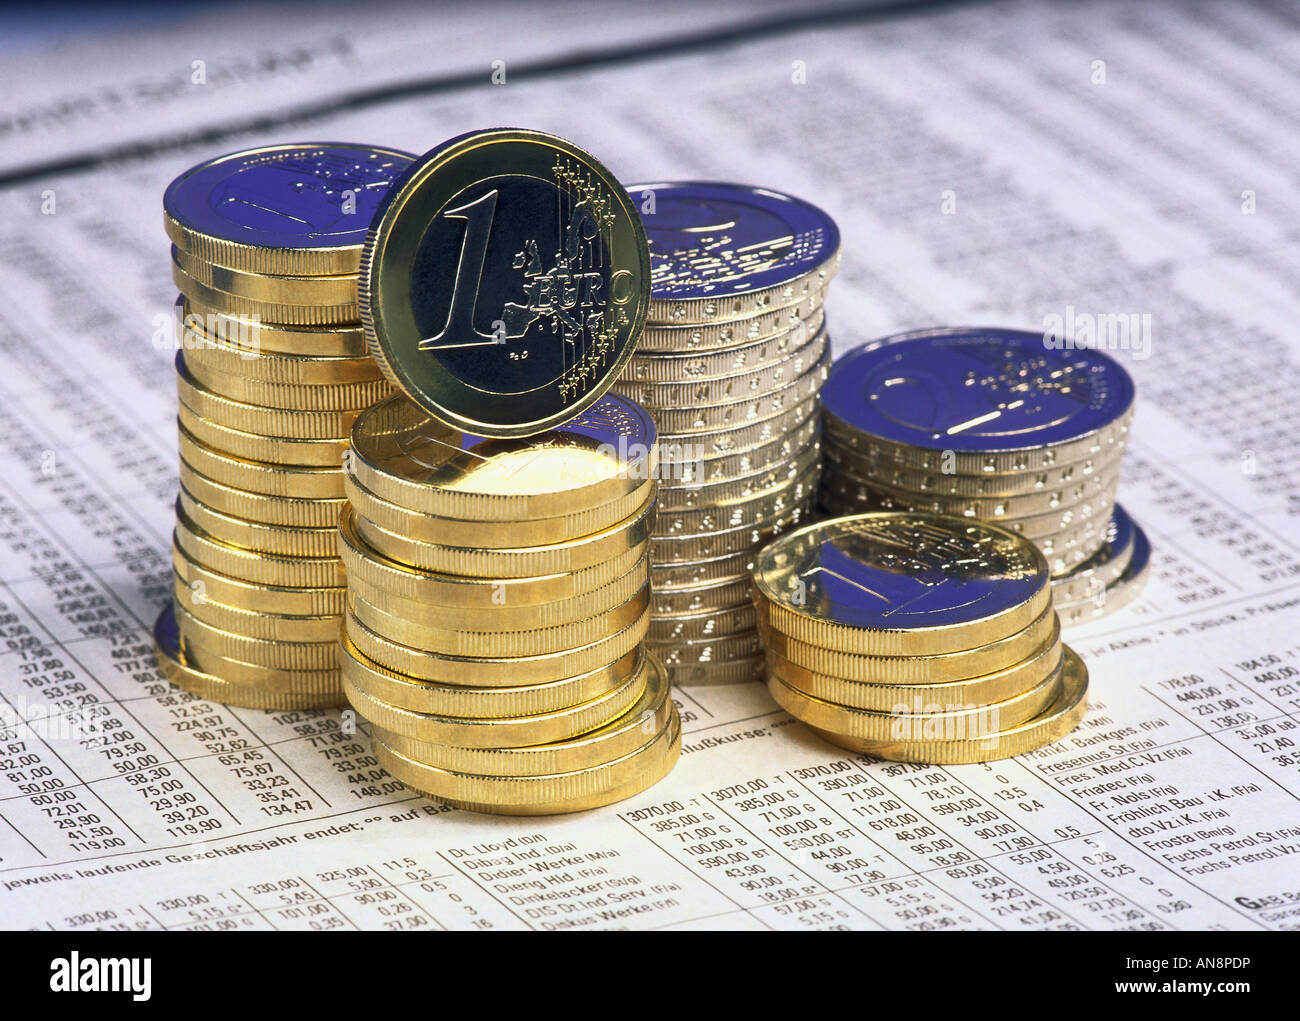 European coins Stock Photo